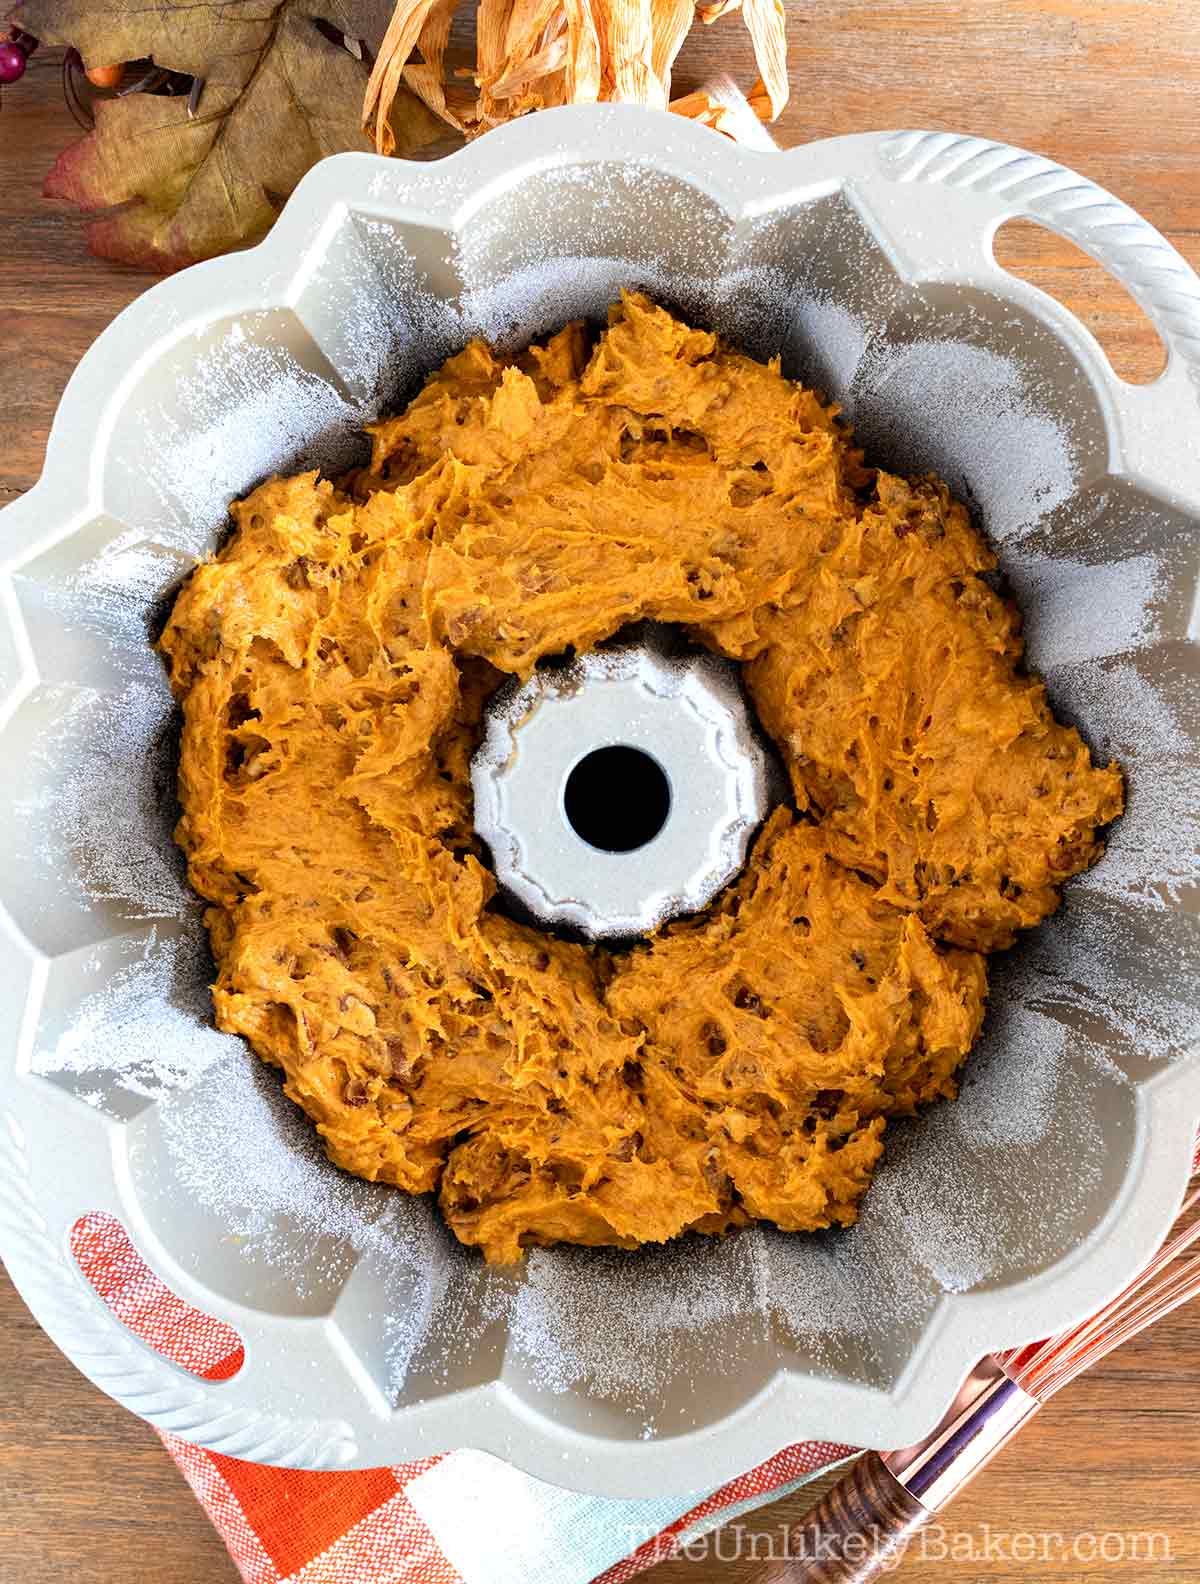 Pumpkin cake batter transfer to prepared pan.